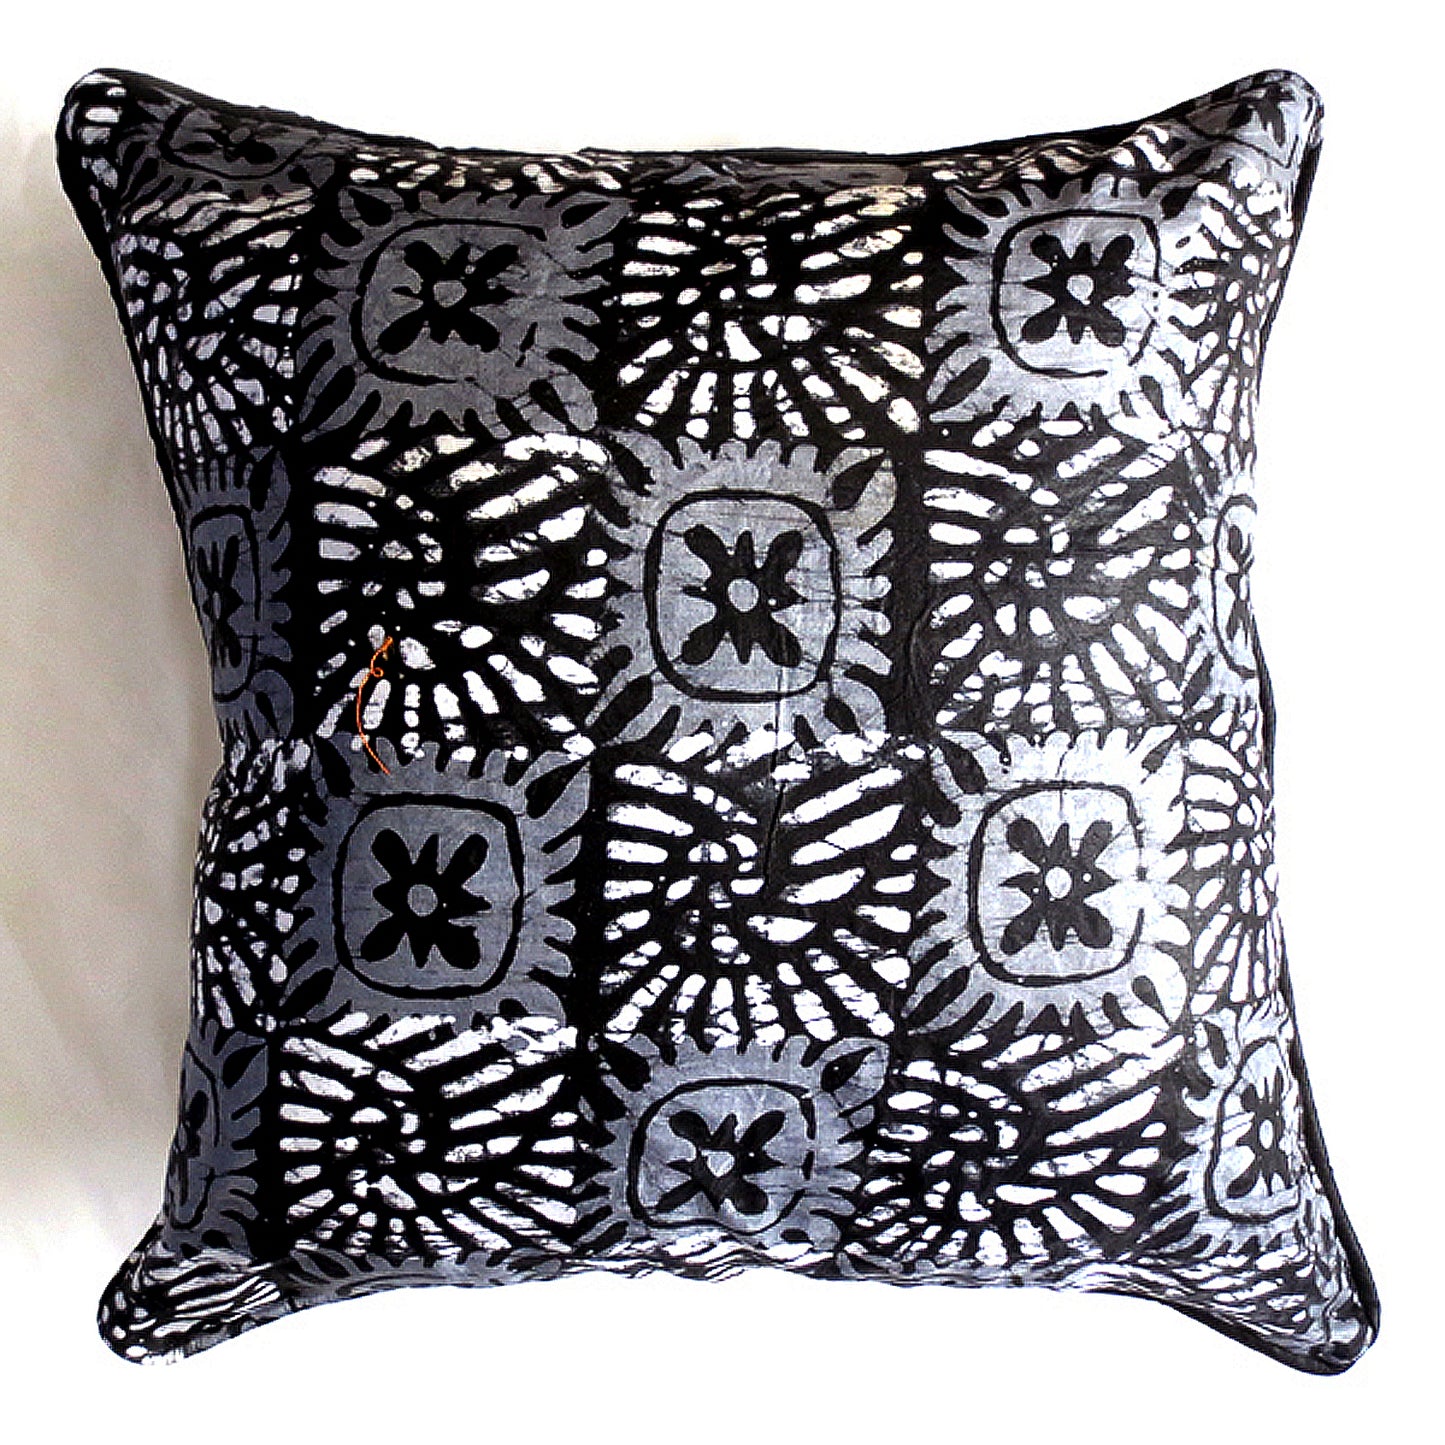 20x20 pillow cover black white noraokafor